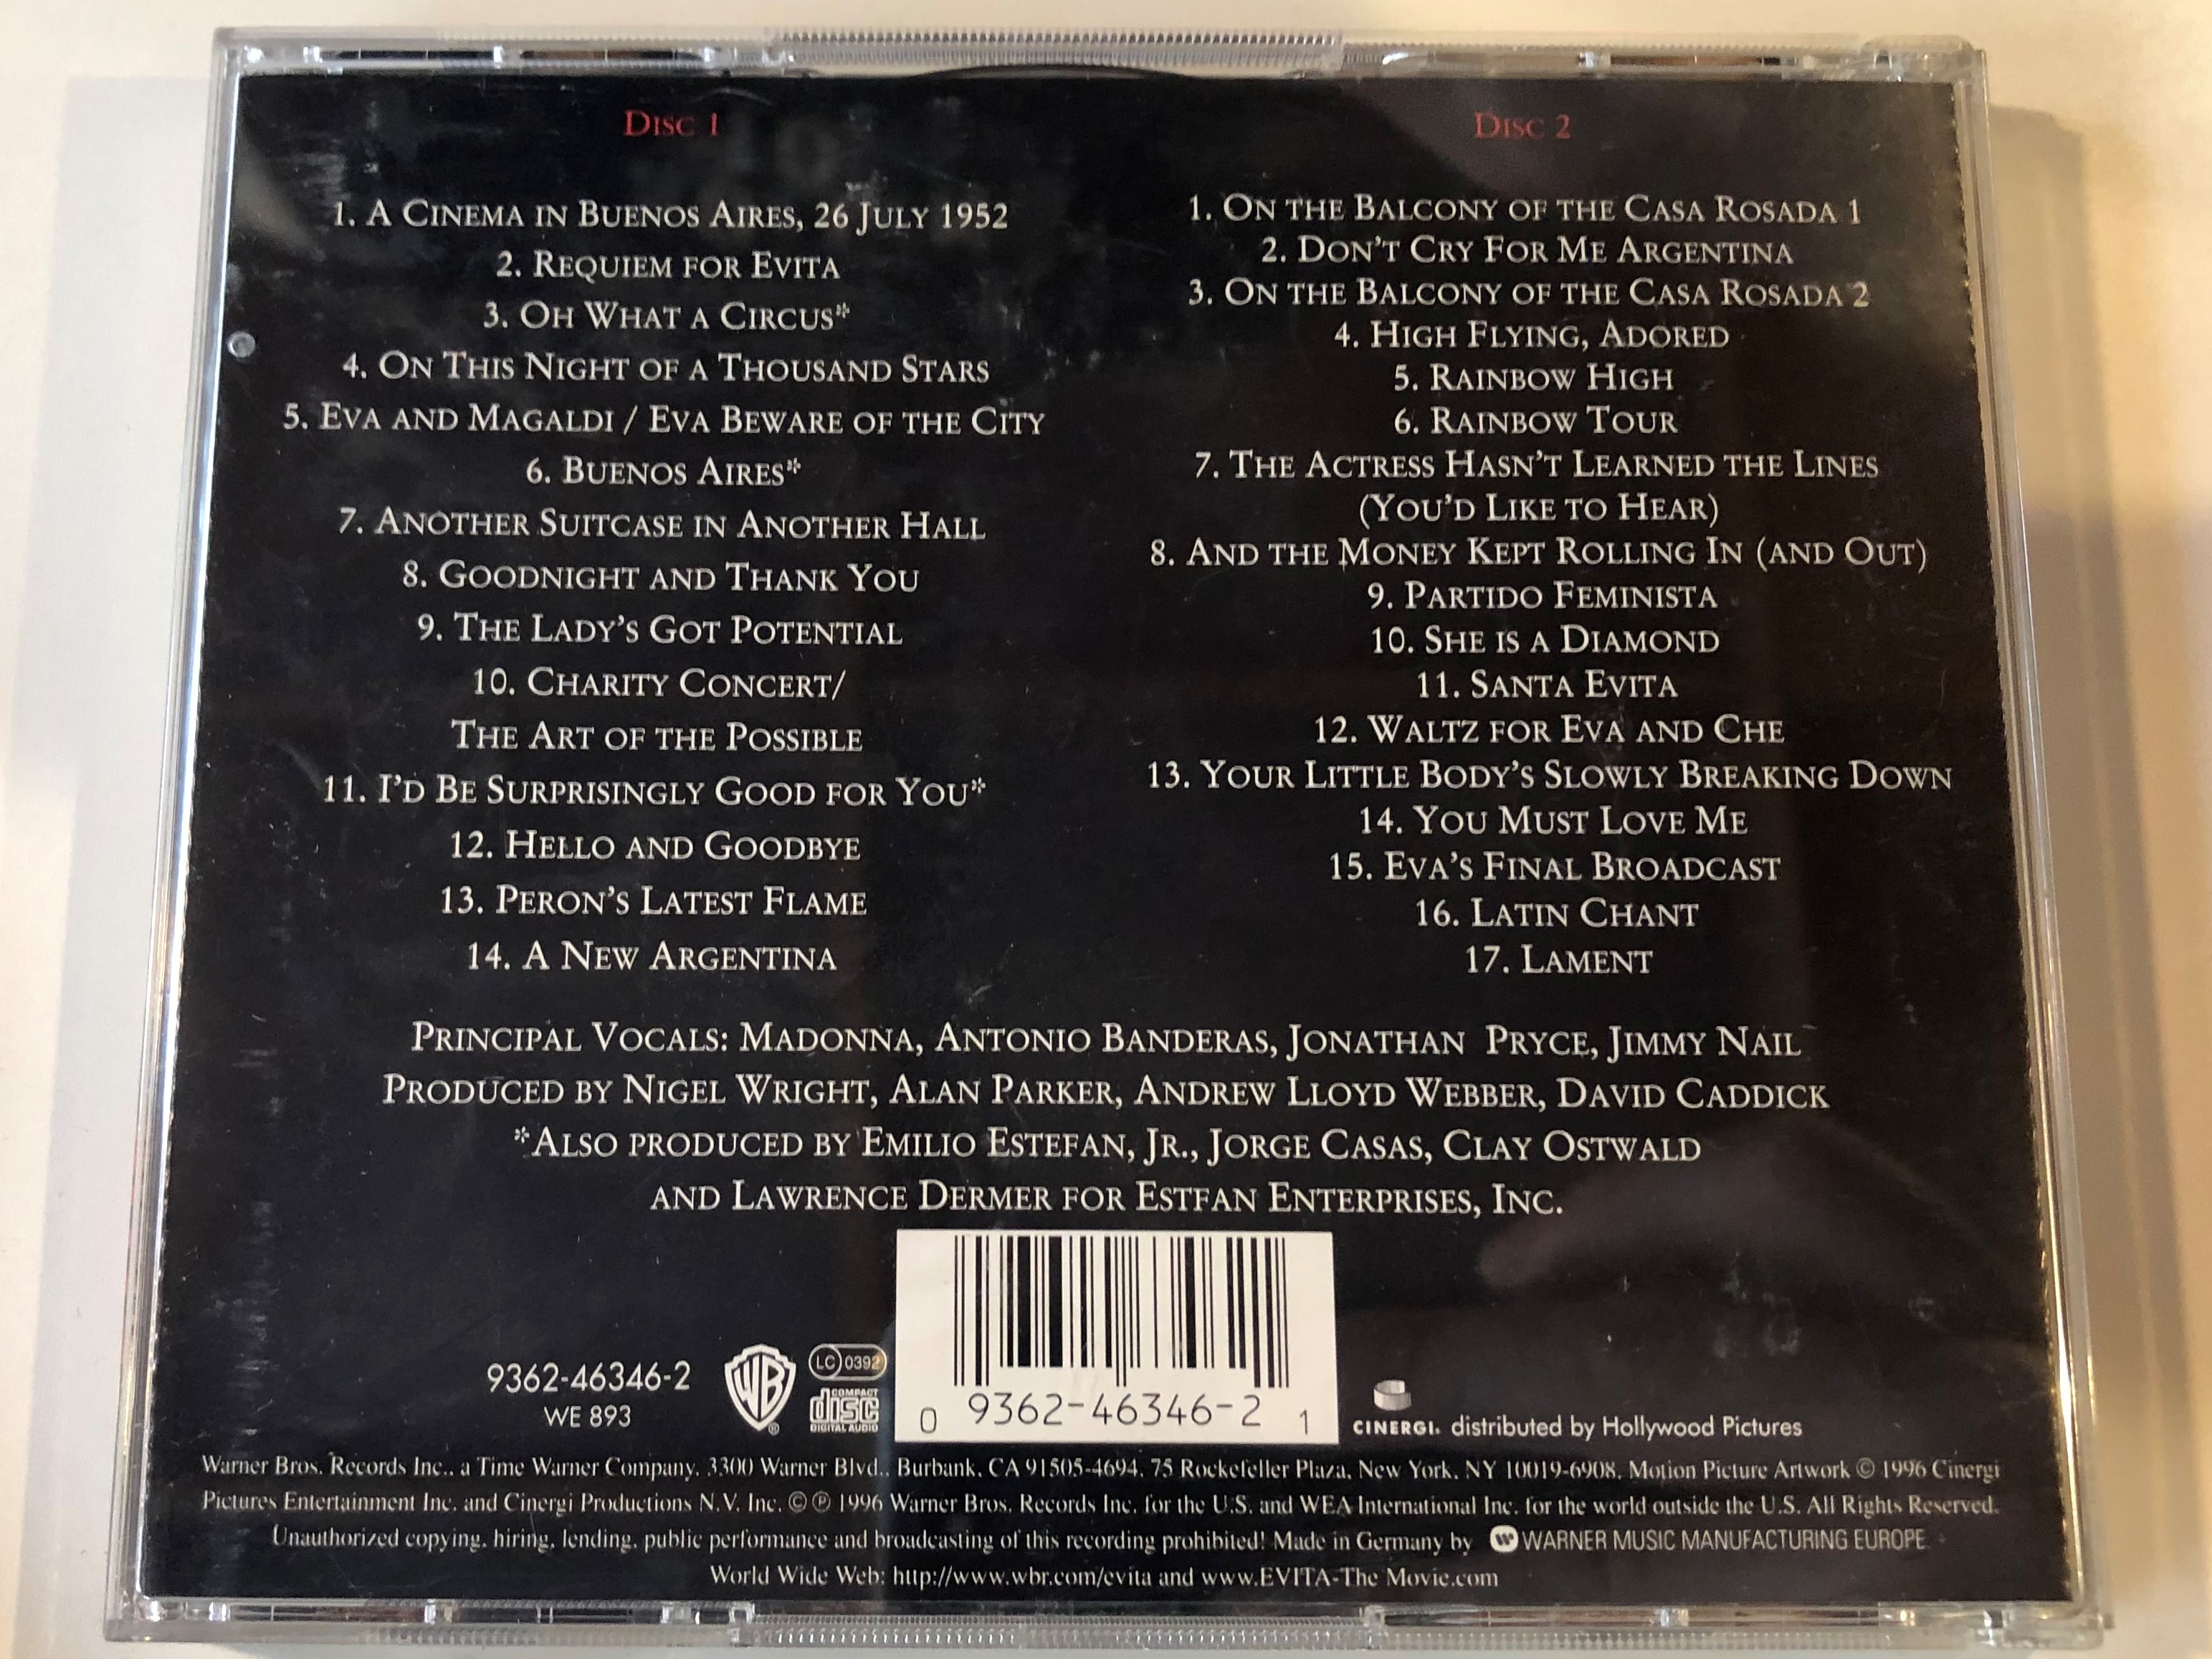 evita-the-motion-picture-music-soundtrack-warner-bros.-records-2x-audio-cd-1996-9362-46346-2-2-.jpg